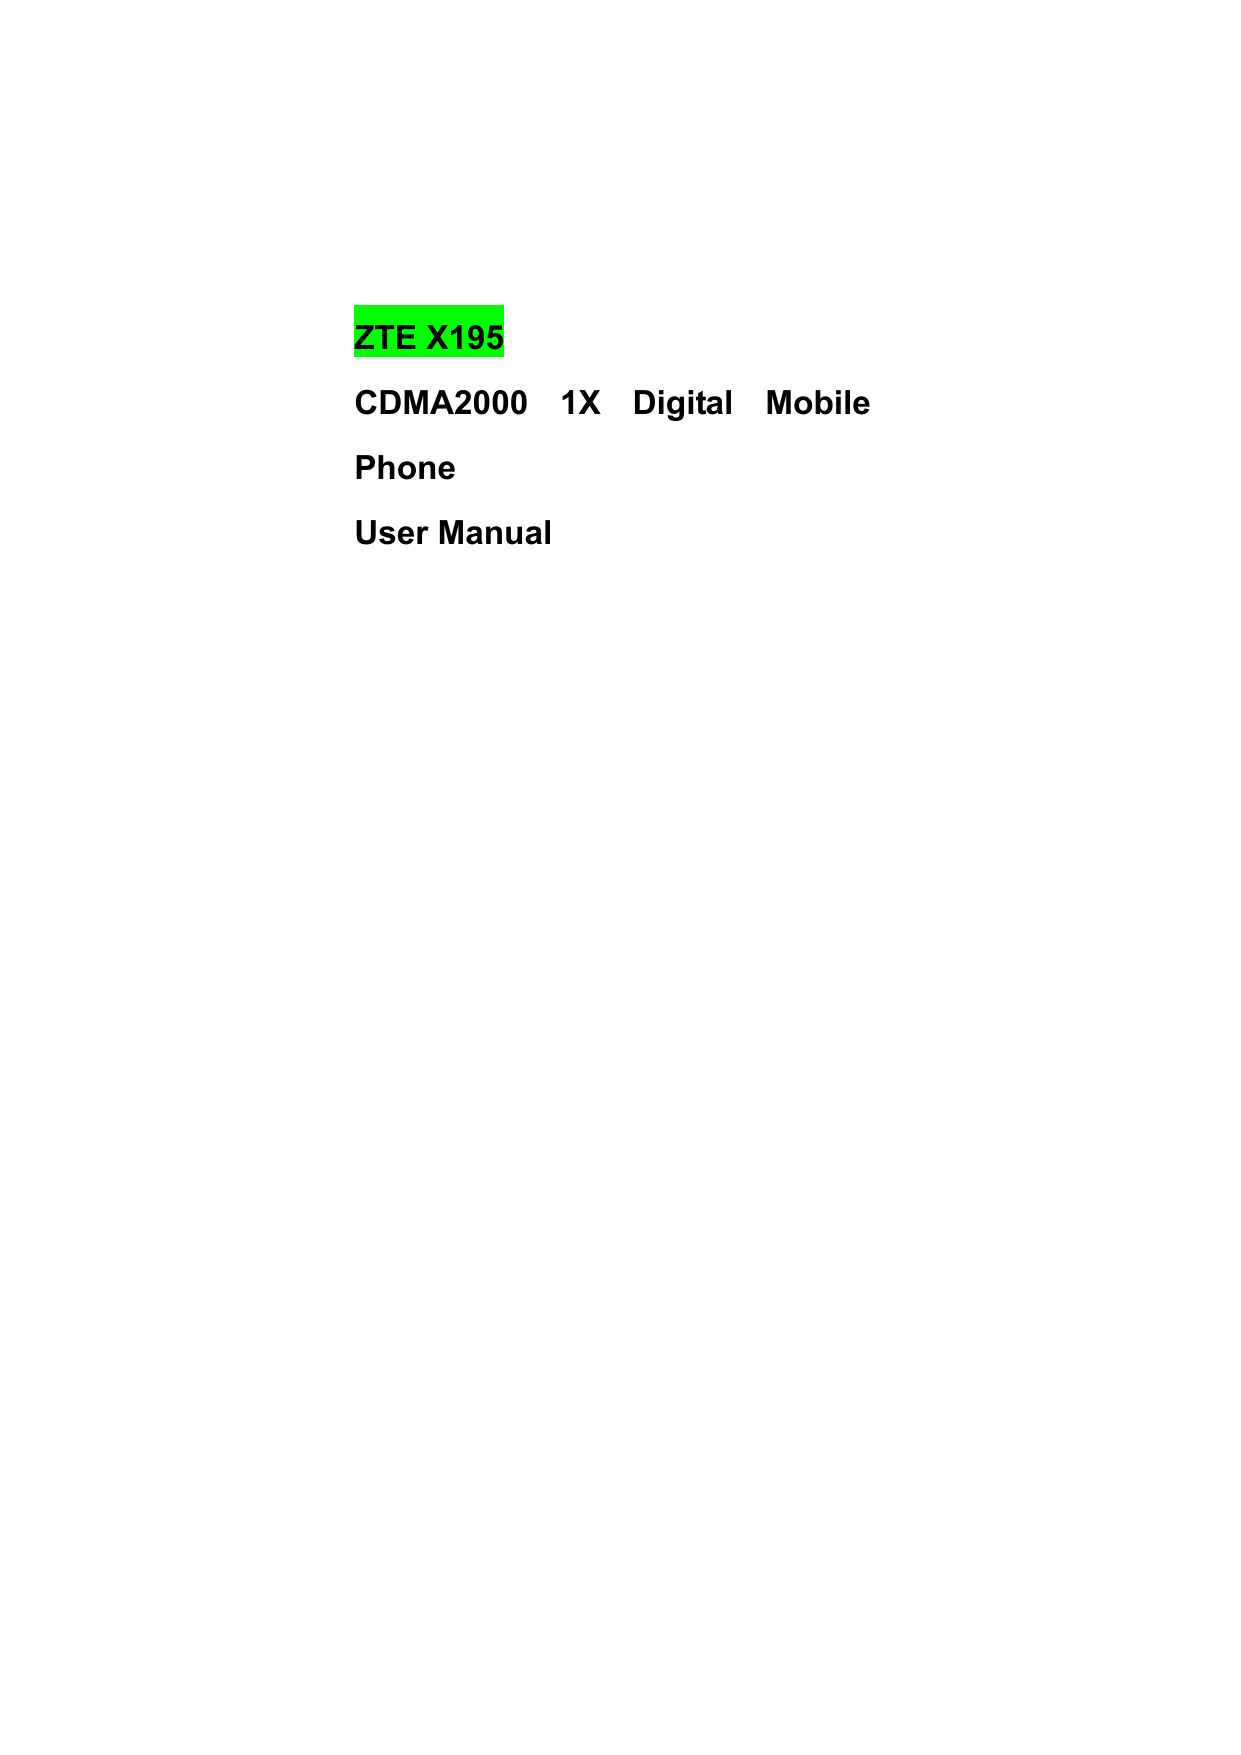                          ZTE X195 CDMA2000 1X Digital Mobile Phone User Manual           